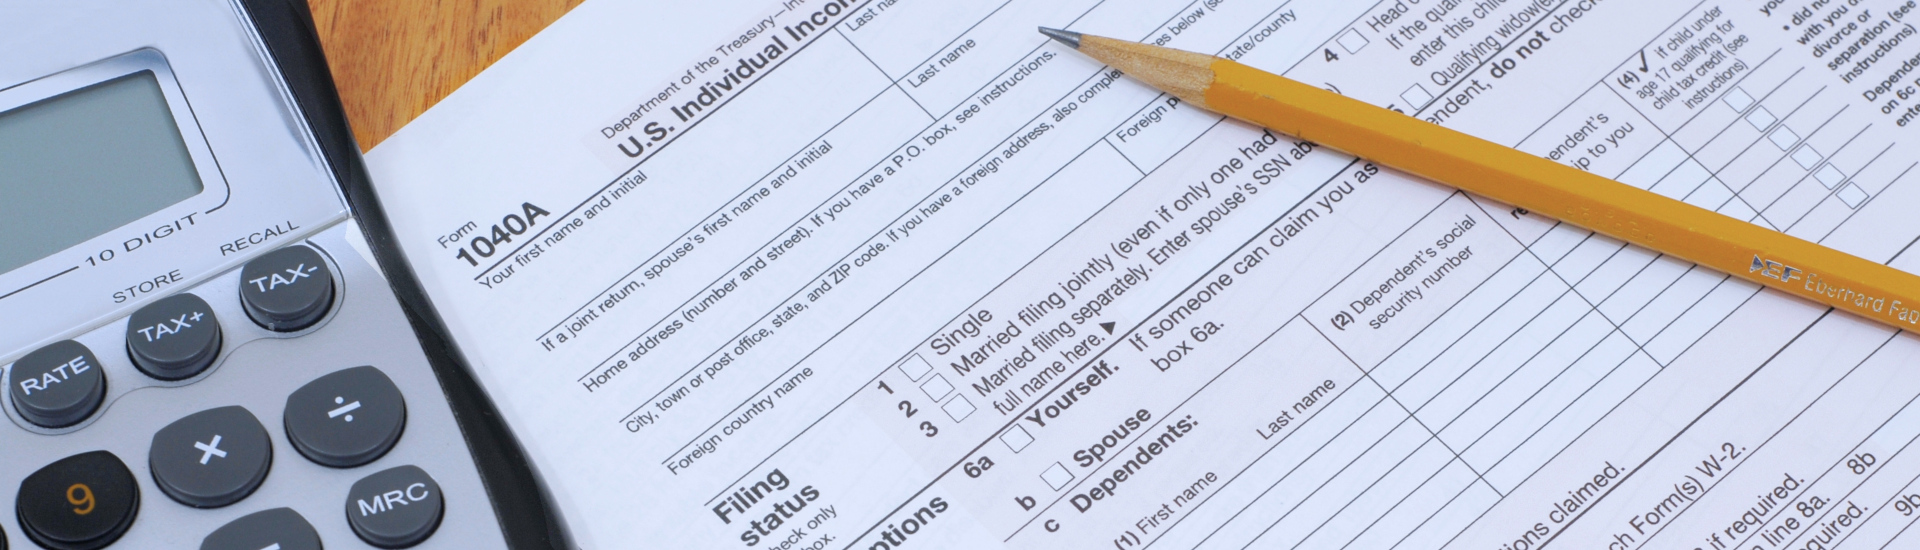 IRS 1040 form, pencil, calculator